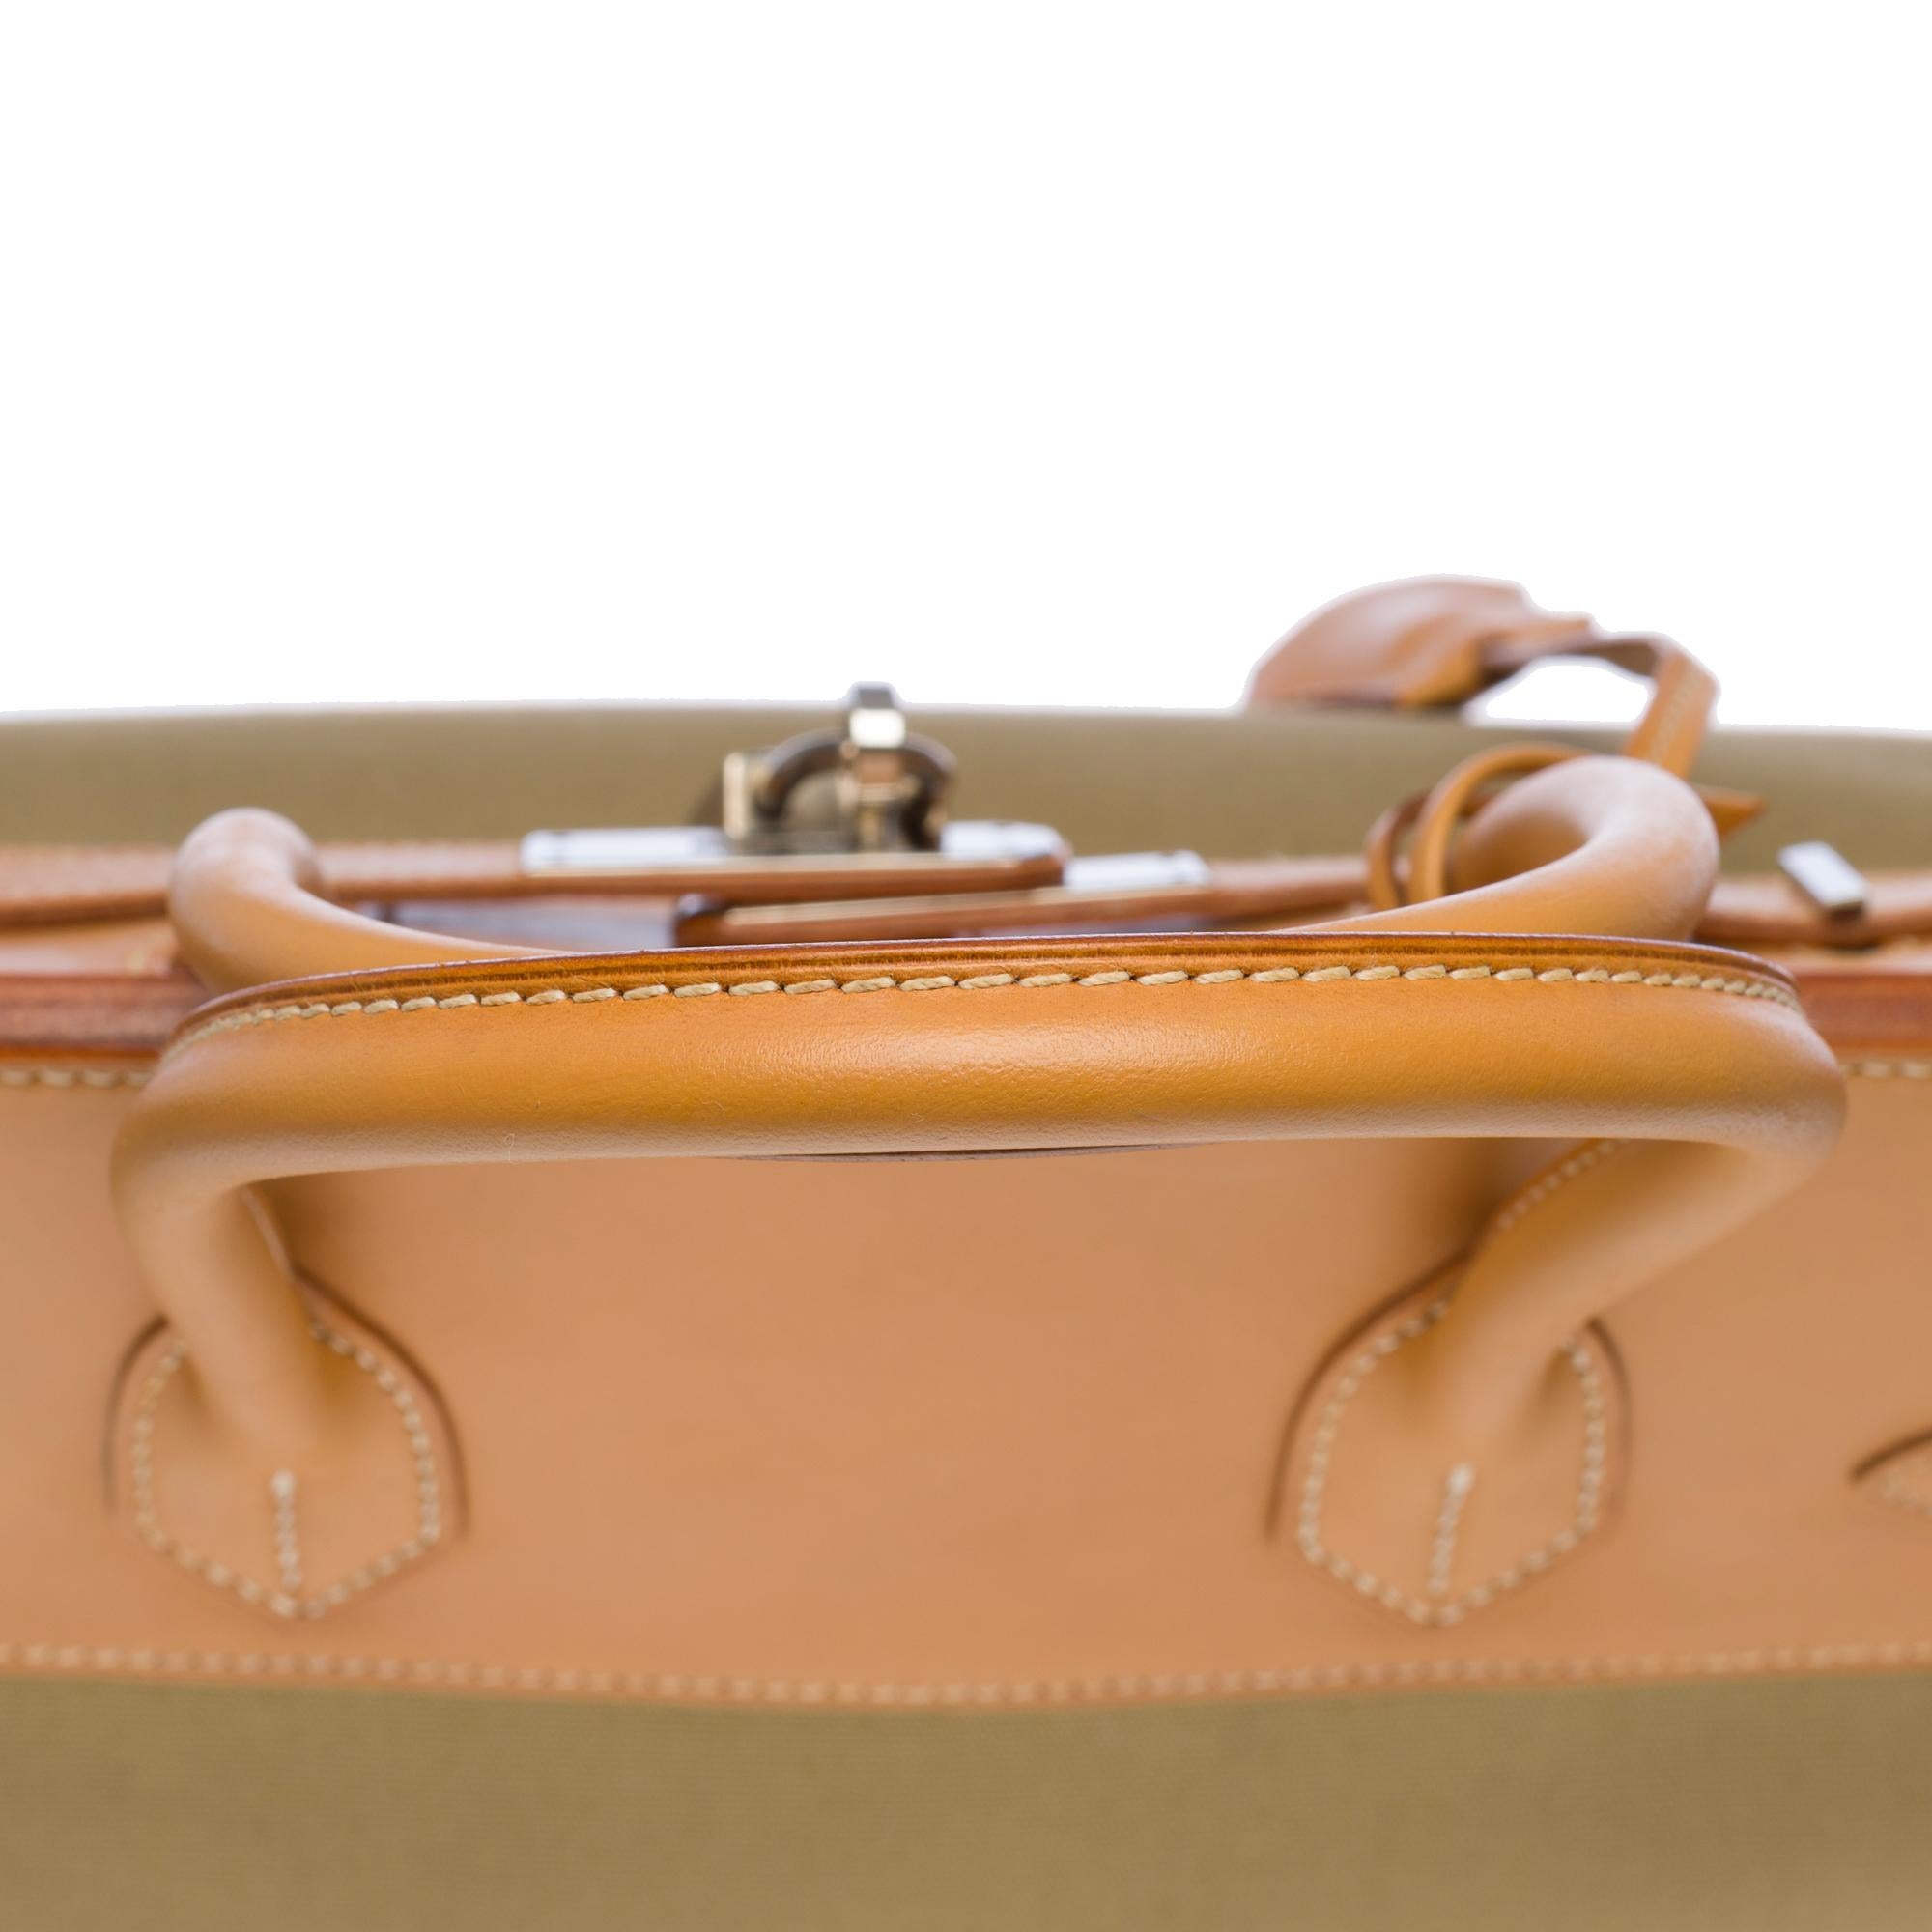 Rare Hermès Birkin 30 handbag in khaki canvas and natural calf leather, SHW For Sale 1